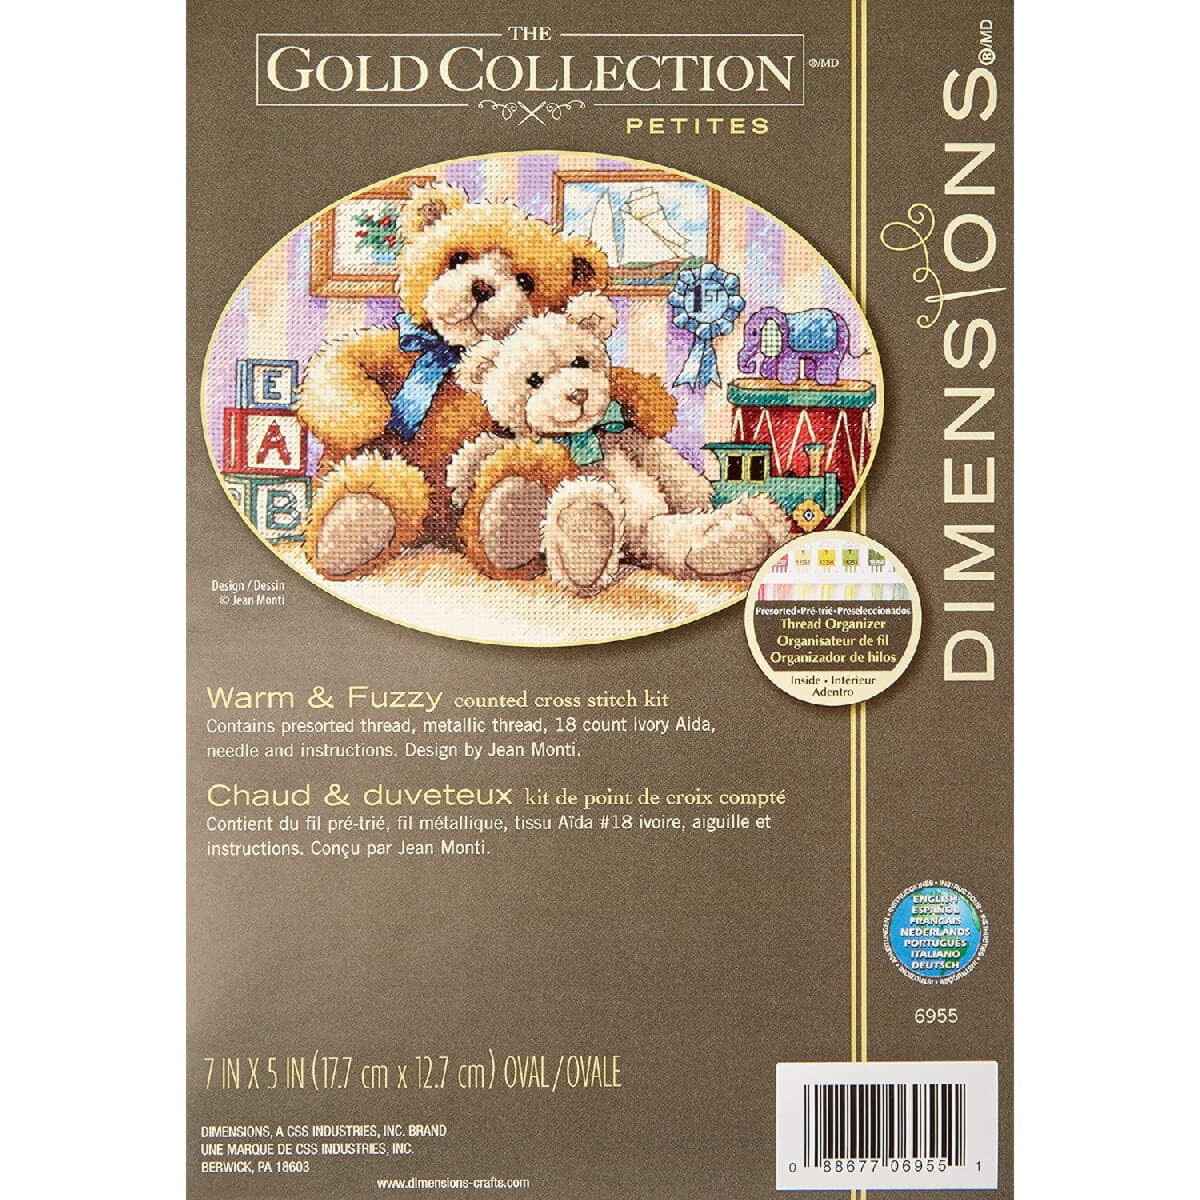 Dimensions telpakket kruissteek "Gold Collection...